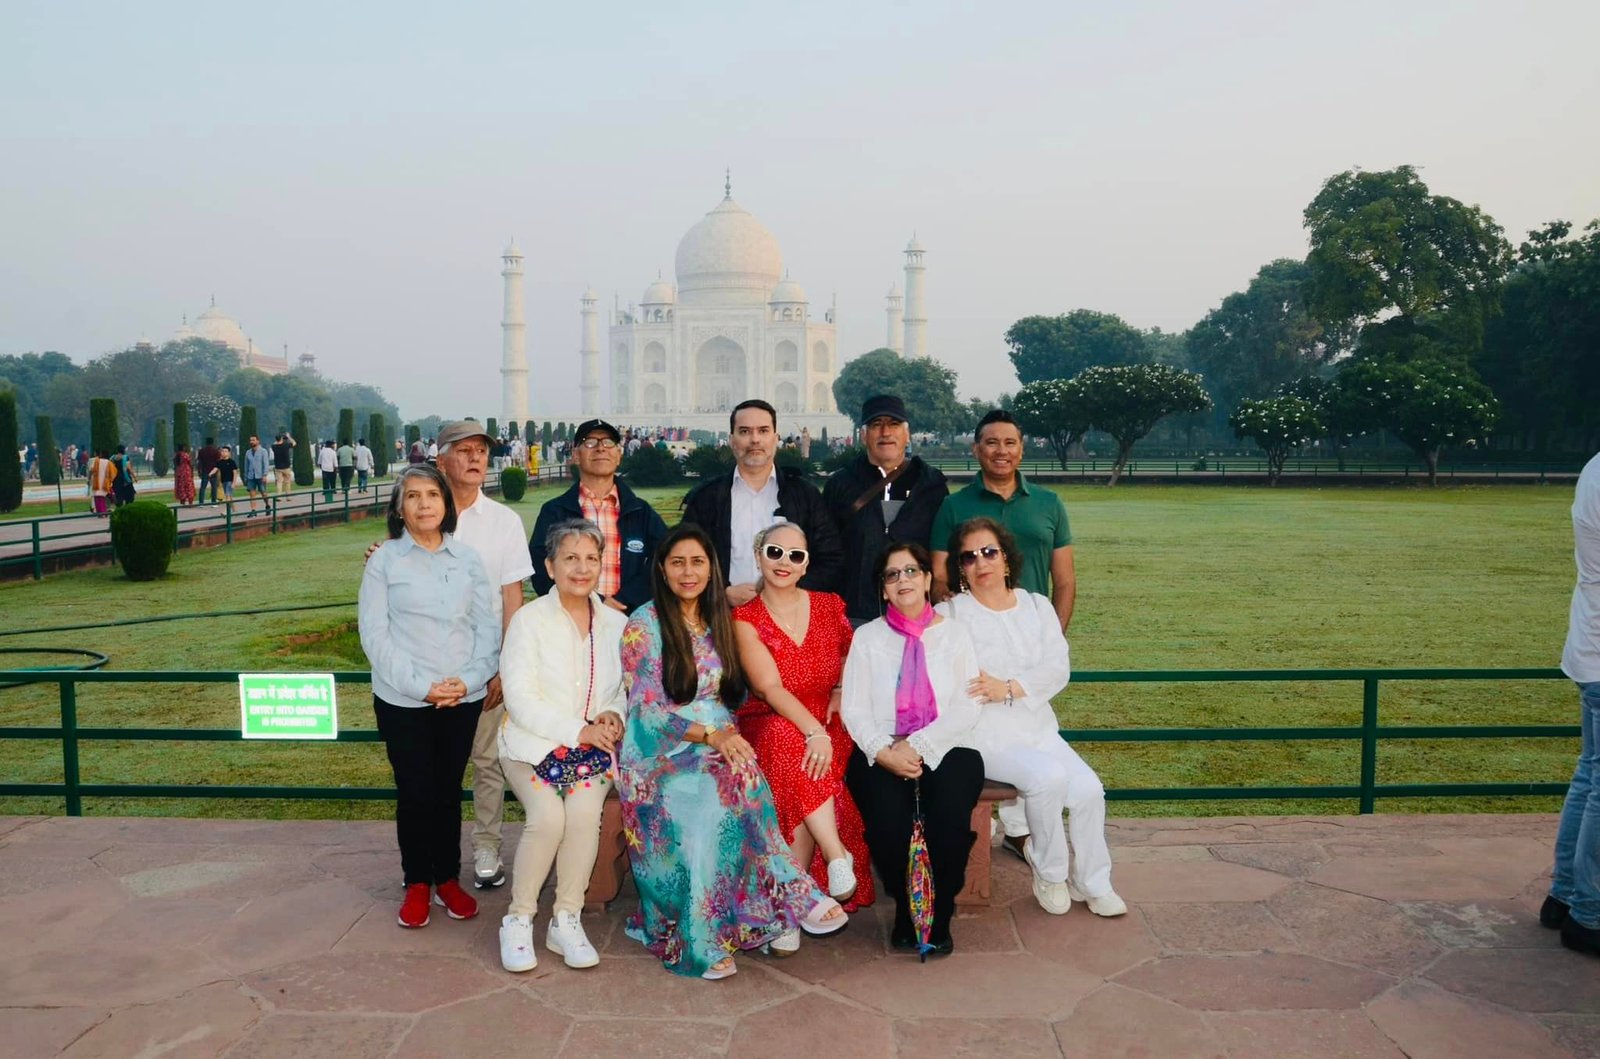 A Magical Day Trip to Taj Mahal from Delhi